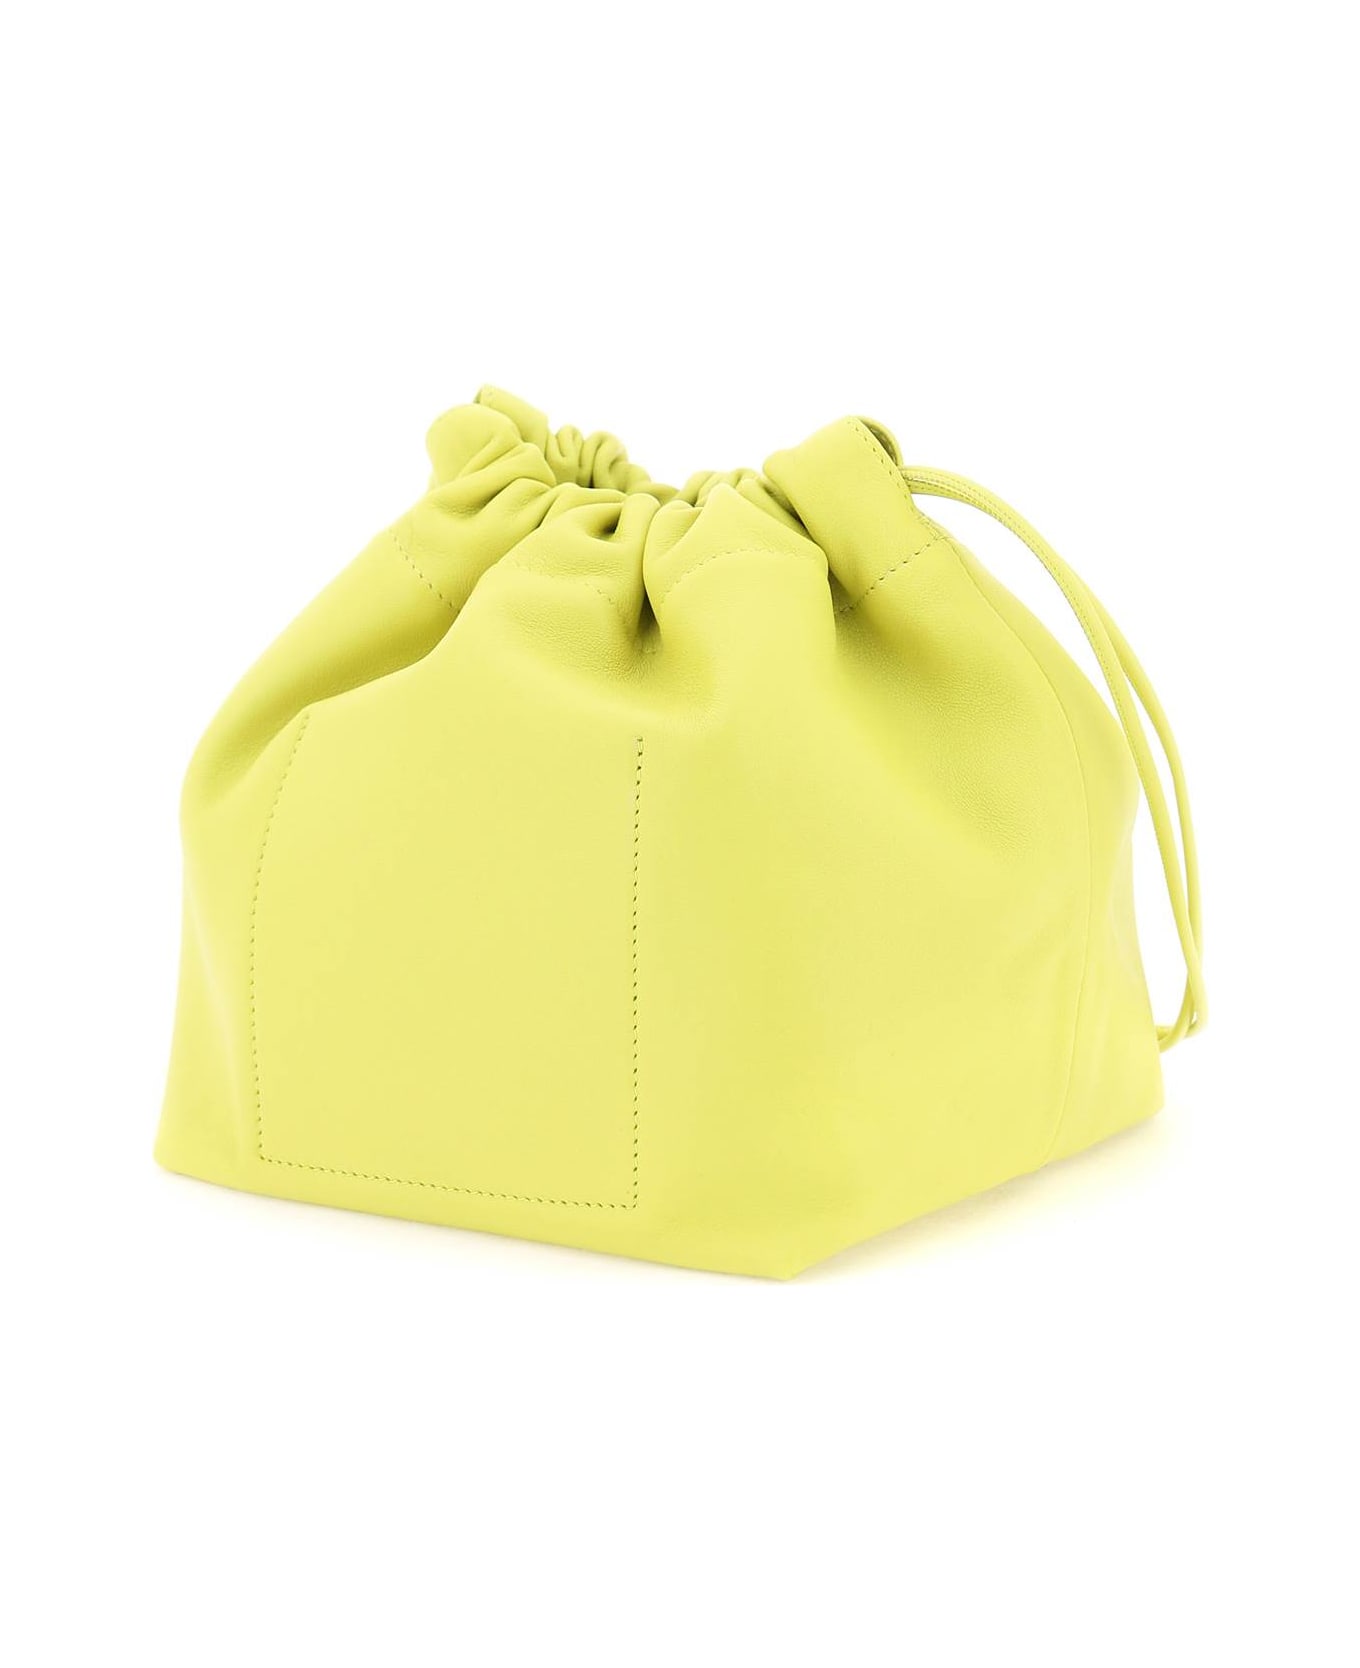 Jil Sander Yellow Leather Bag - Green